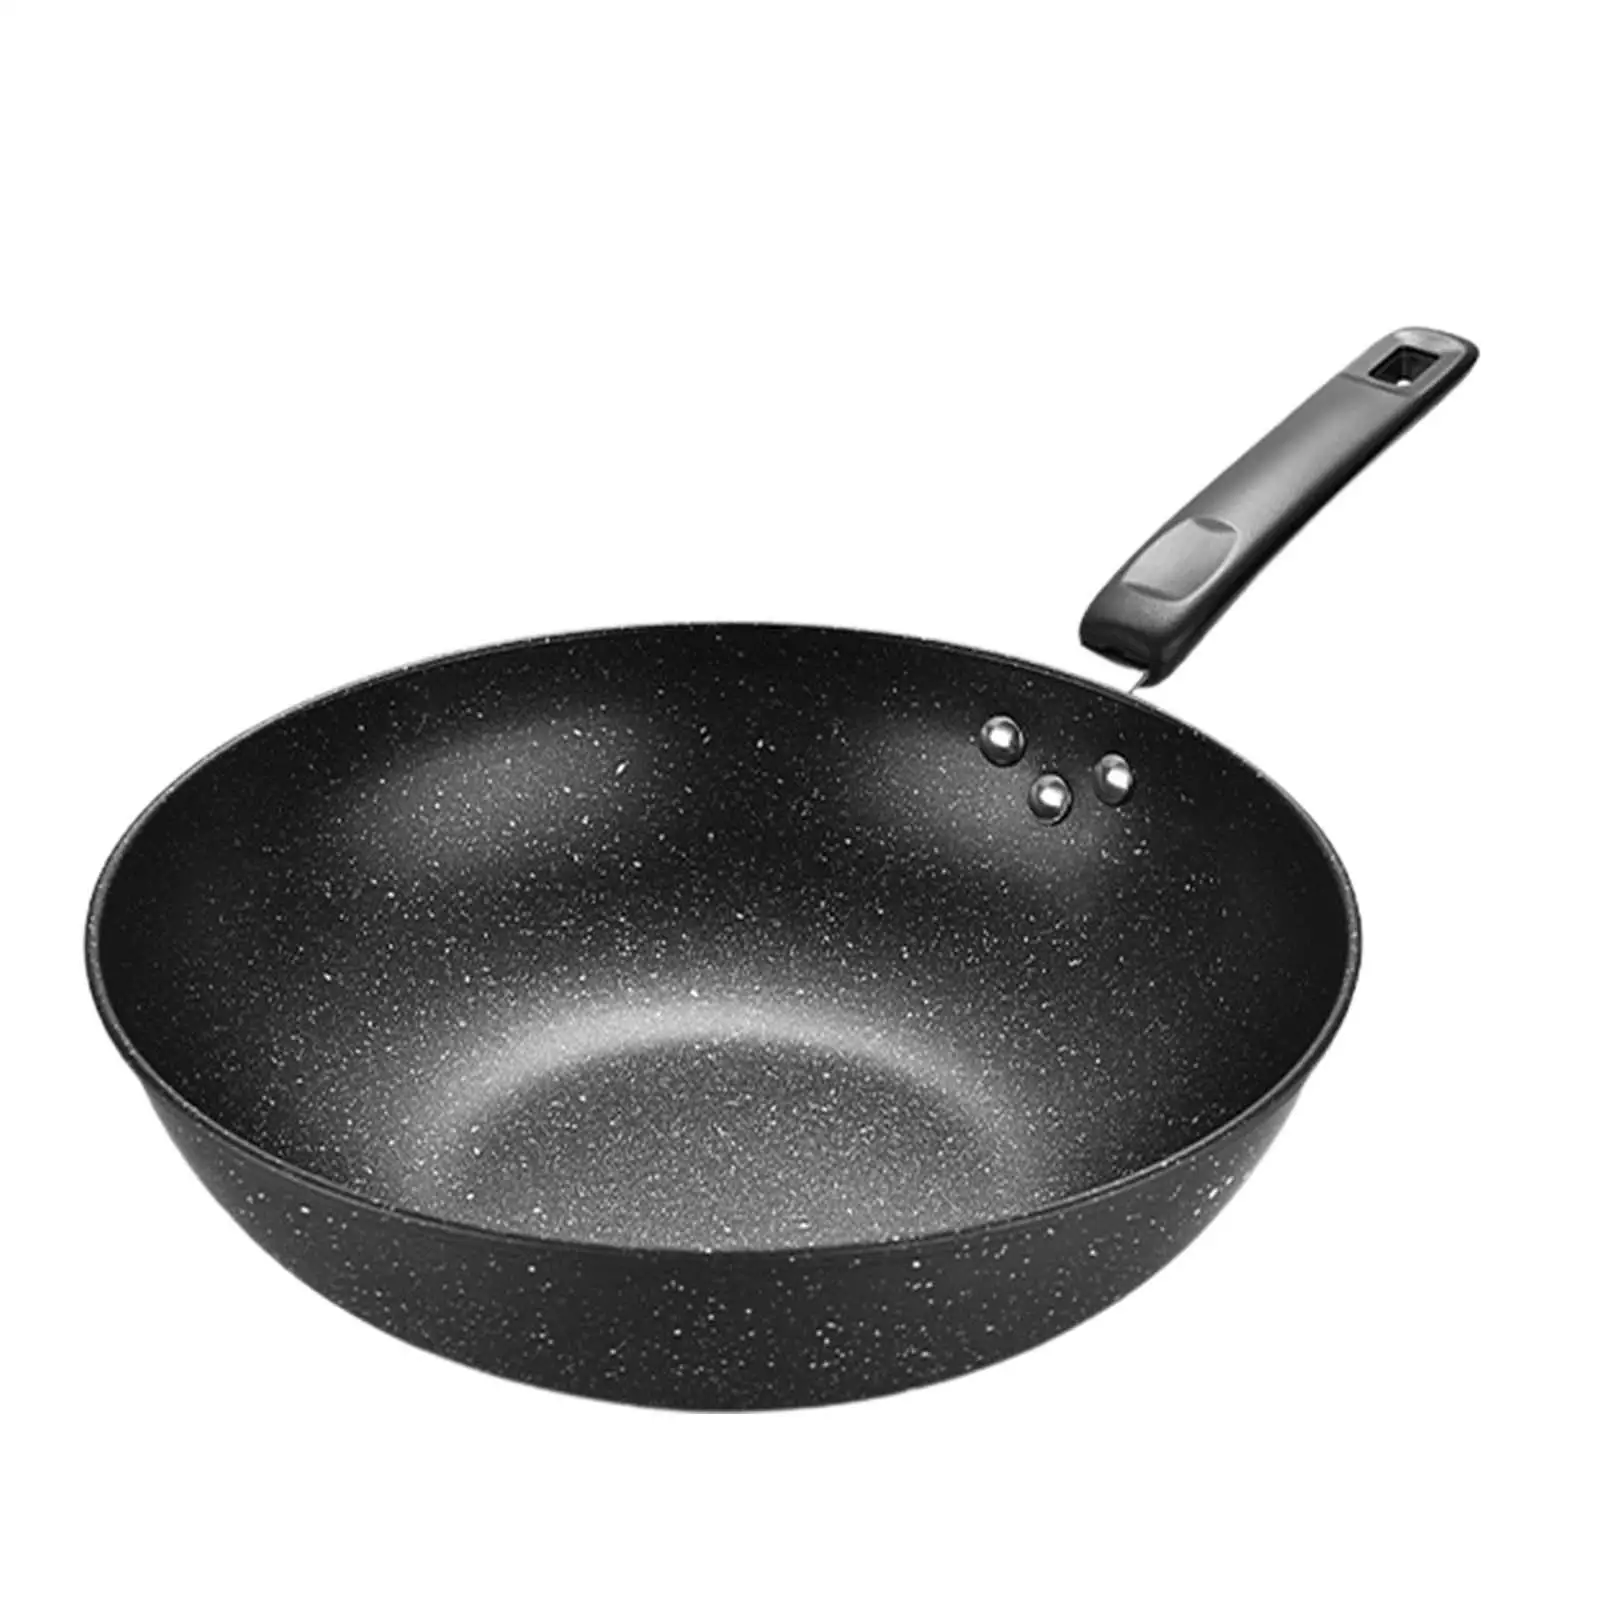 Maifan Stone Pan Multifunction 12 inch Metal Frypan Wok Pan Non Stick Skillet Saute Pan for Home Restaurant Kitchen All Stovetop